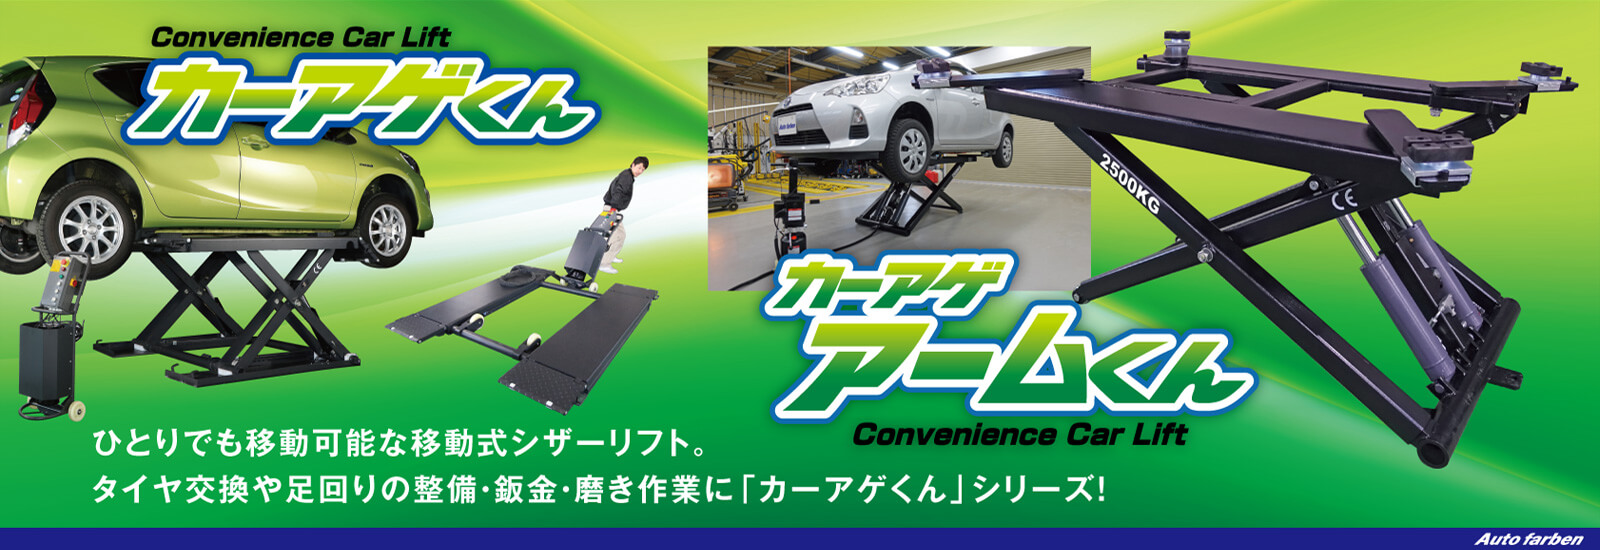 Convenience Car Lift カーアゲくん　ひとりでも移動可能な移動式シザーリフト。タイヤ交換や足回りの整備・鈑金・磨き作業に「カーアゲくん」シリーズ！